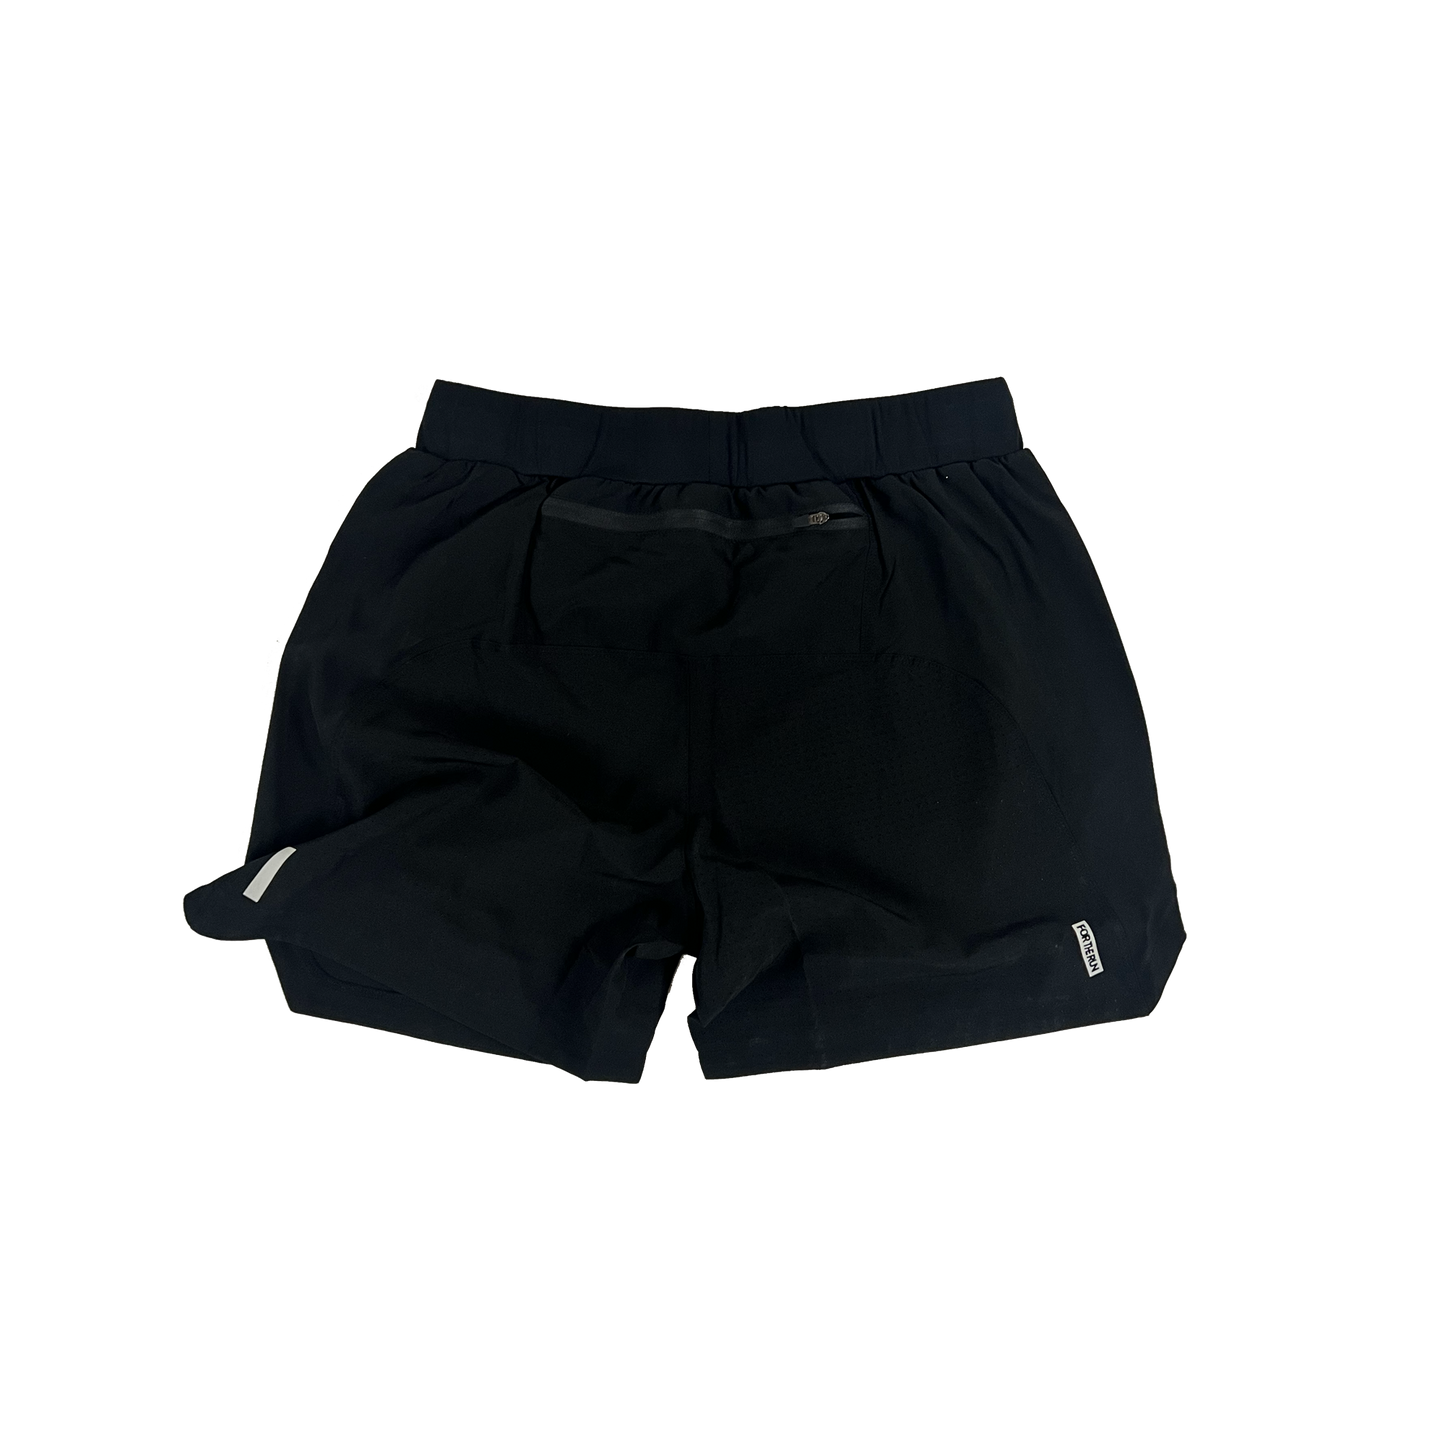 Everhart 5" Shorts, Men's - Black